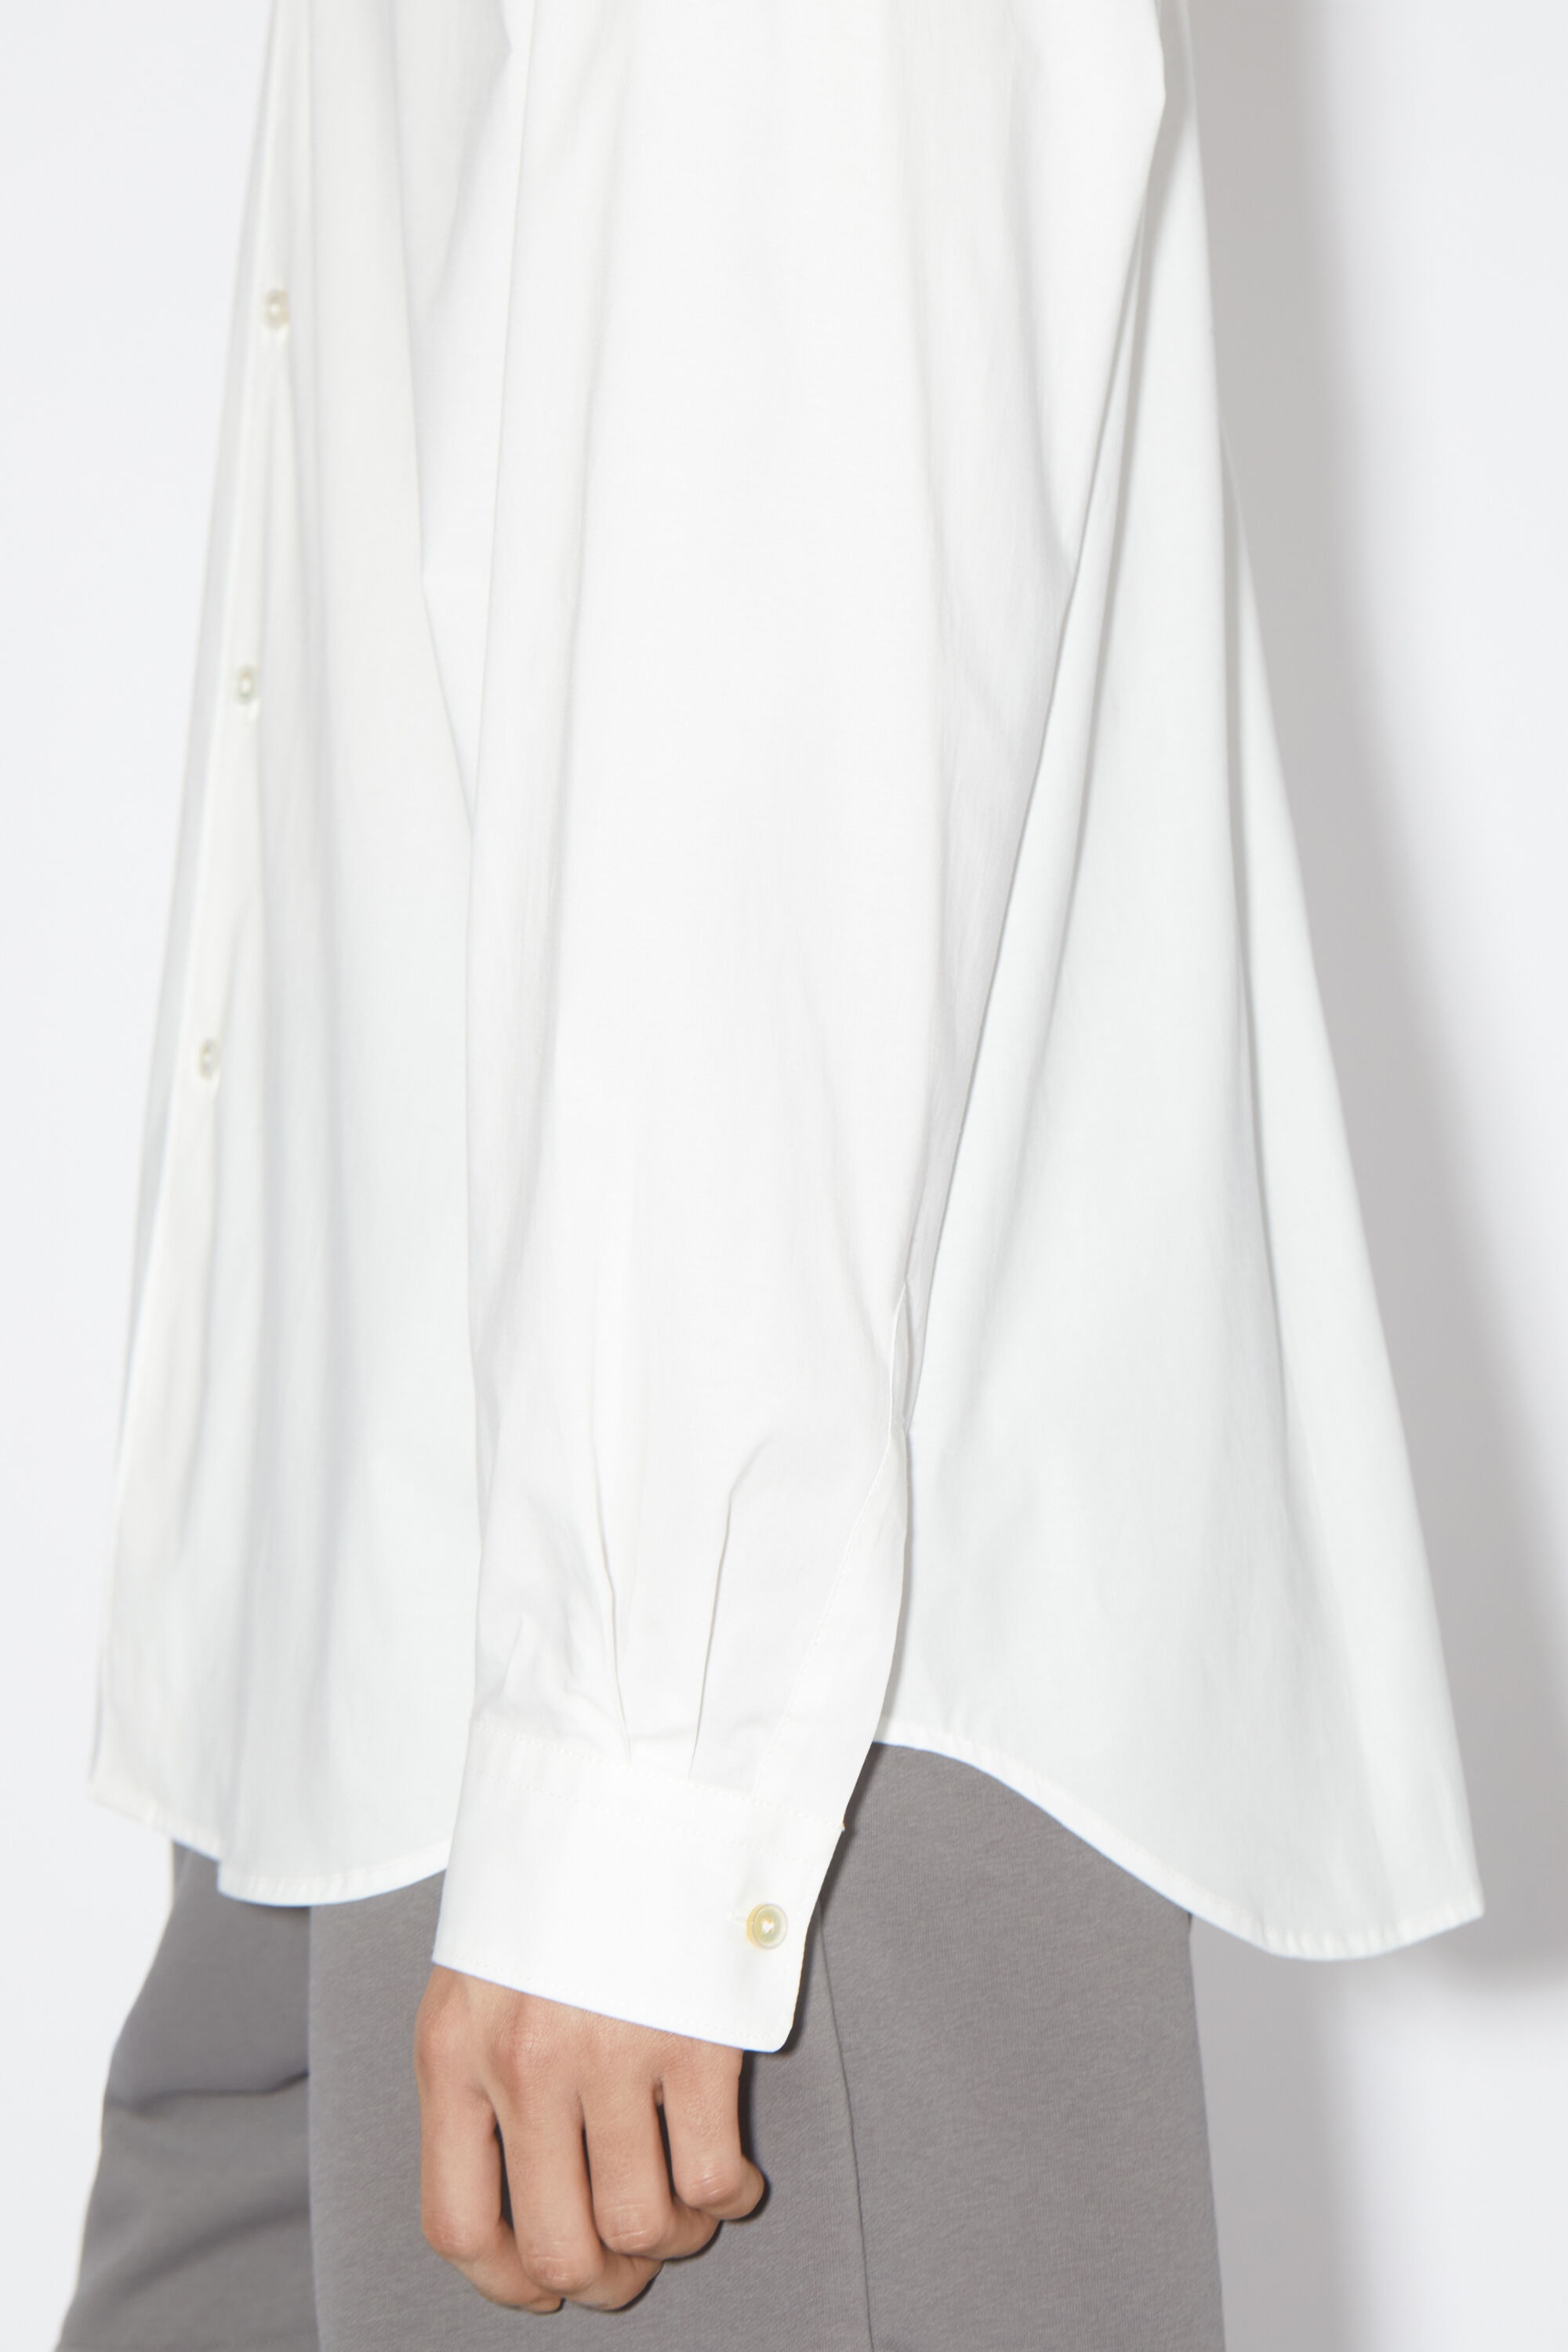 Acne Studios - Button-up shirt - White